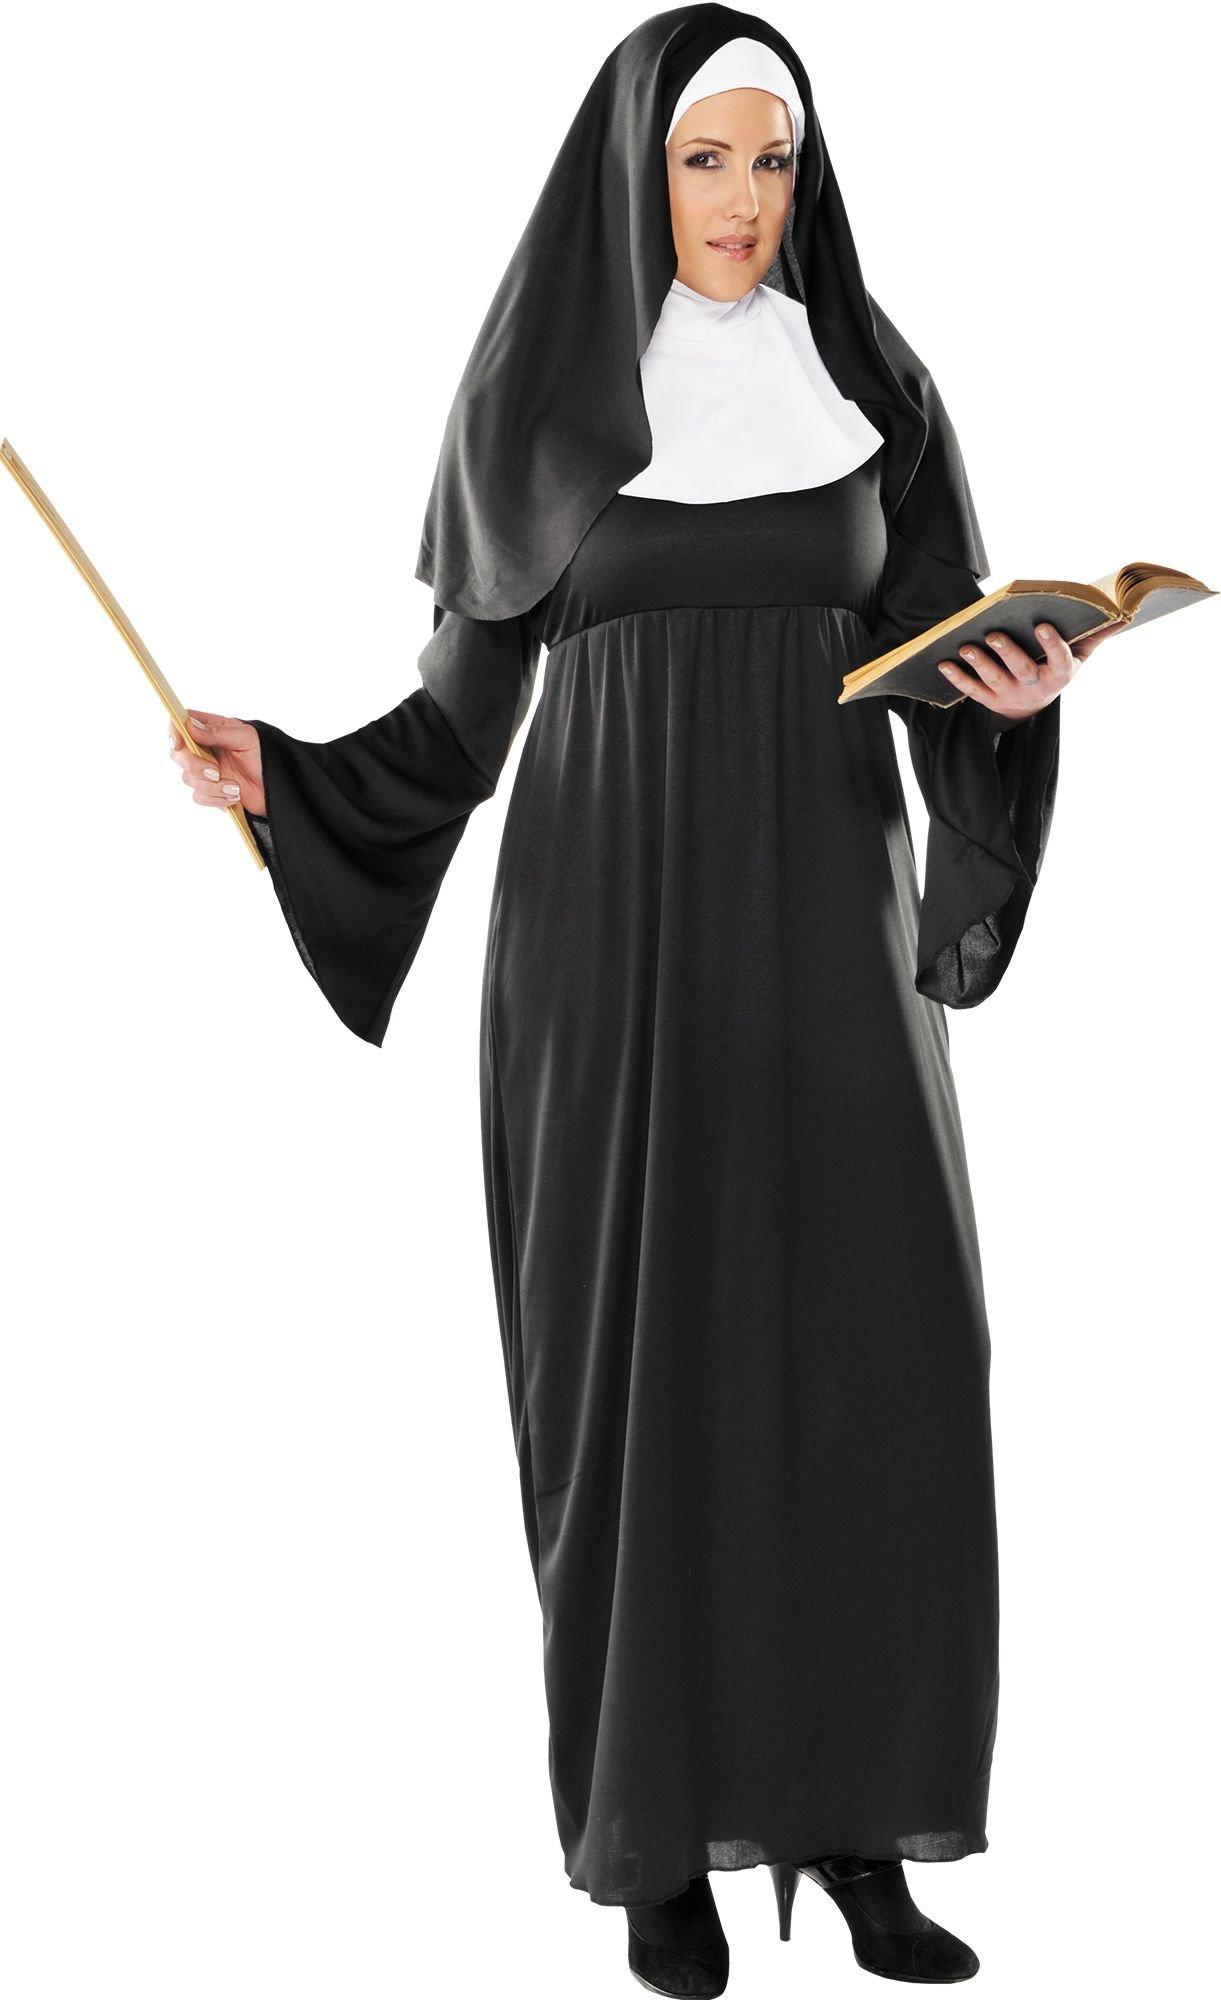  HPMNS Nun Costume for Women - Nun Costume Set Include